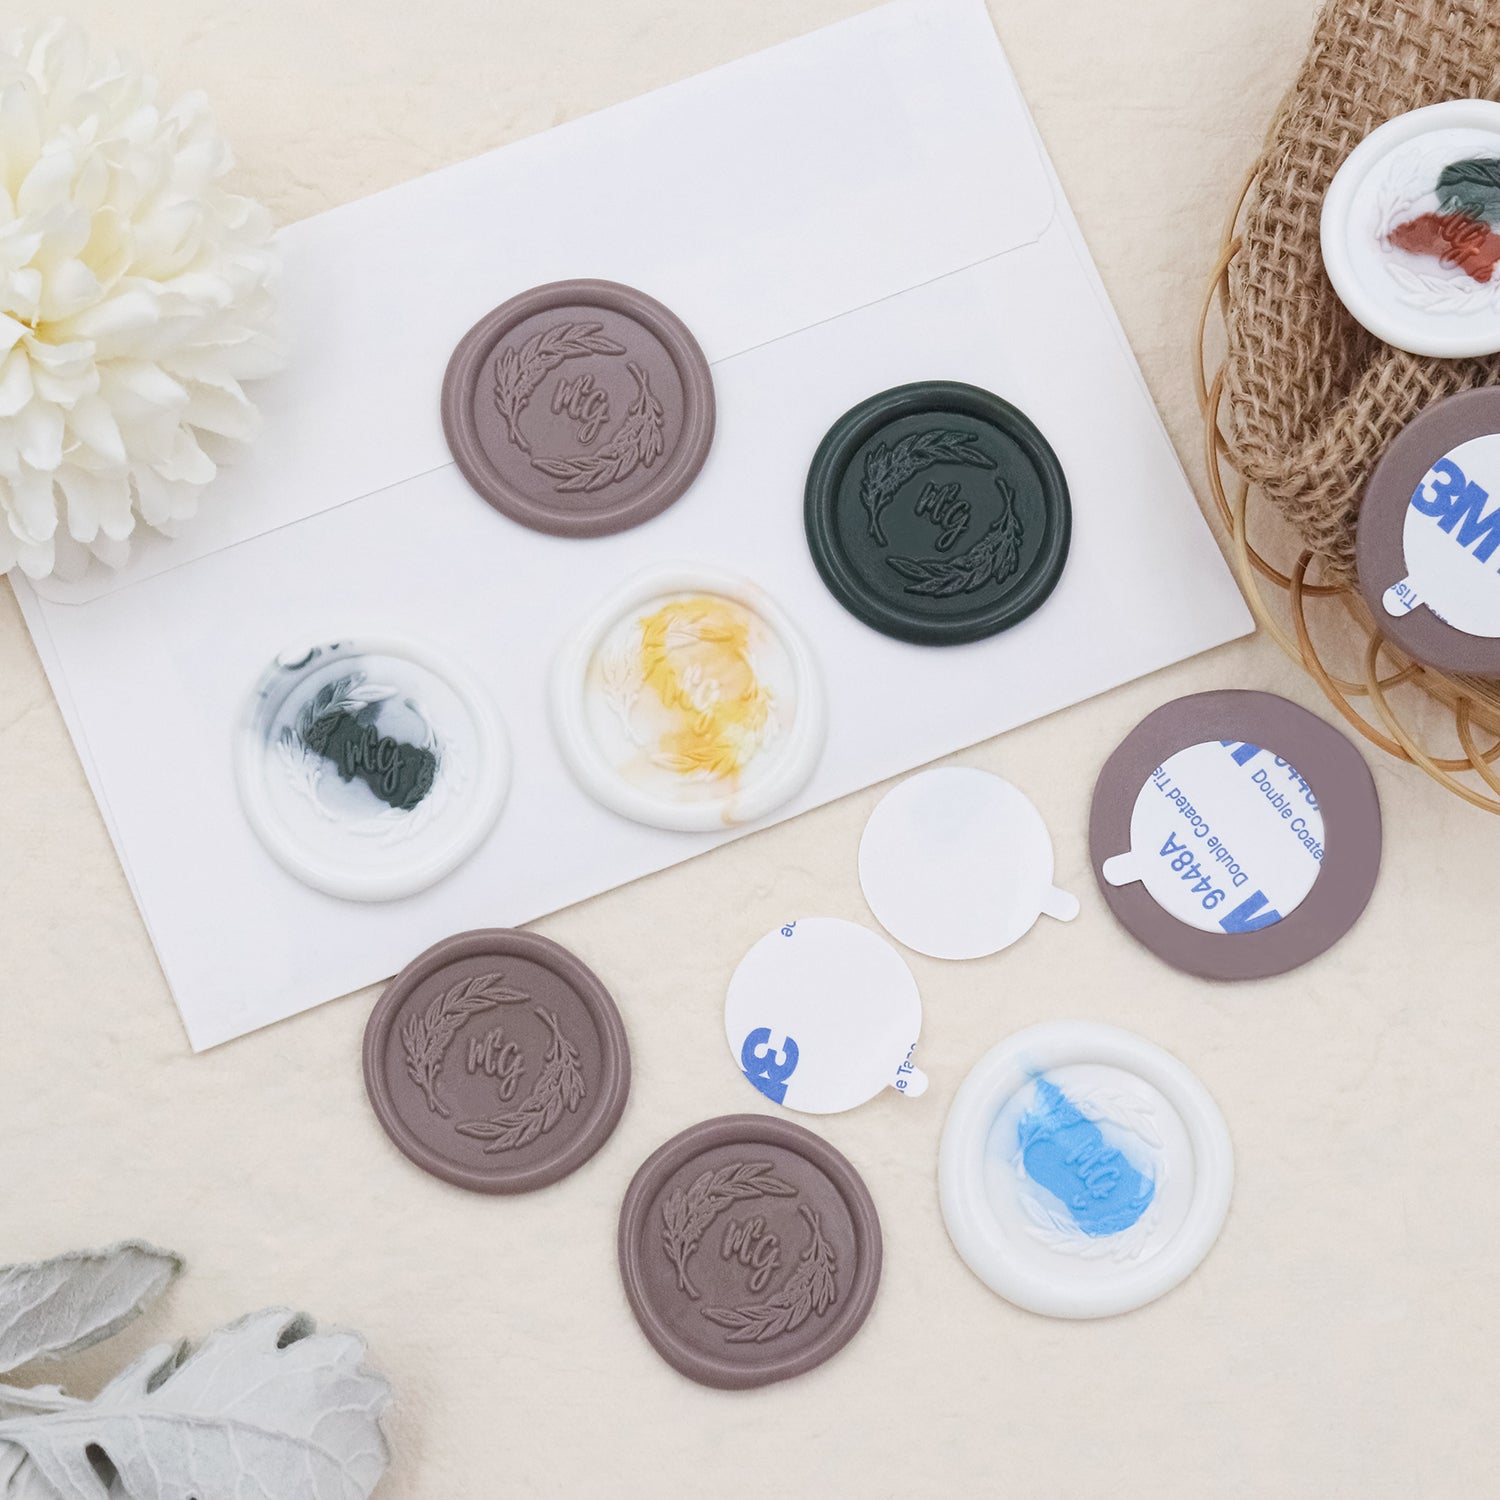 Rose D5 Self Adhesive Wax Seals, Wax Seal Stickers, Envelope Wax